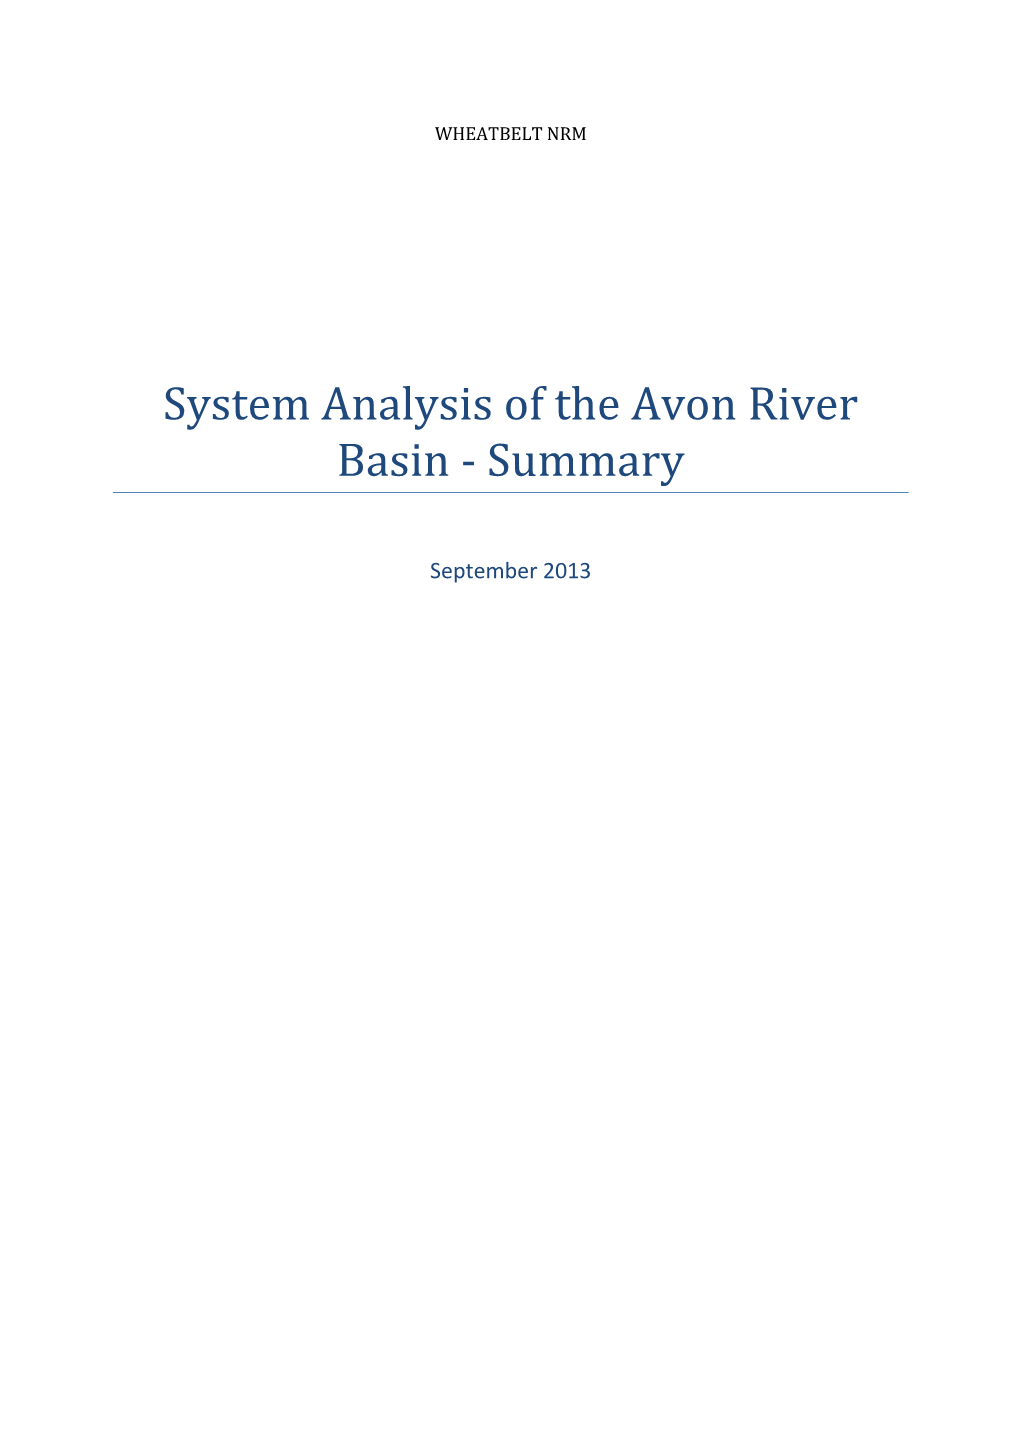 System Analysis of the Avon River Basin - Summary